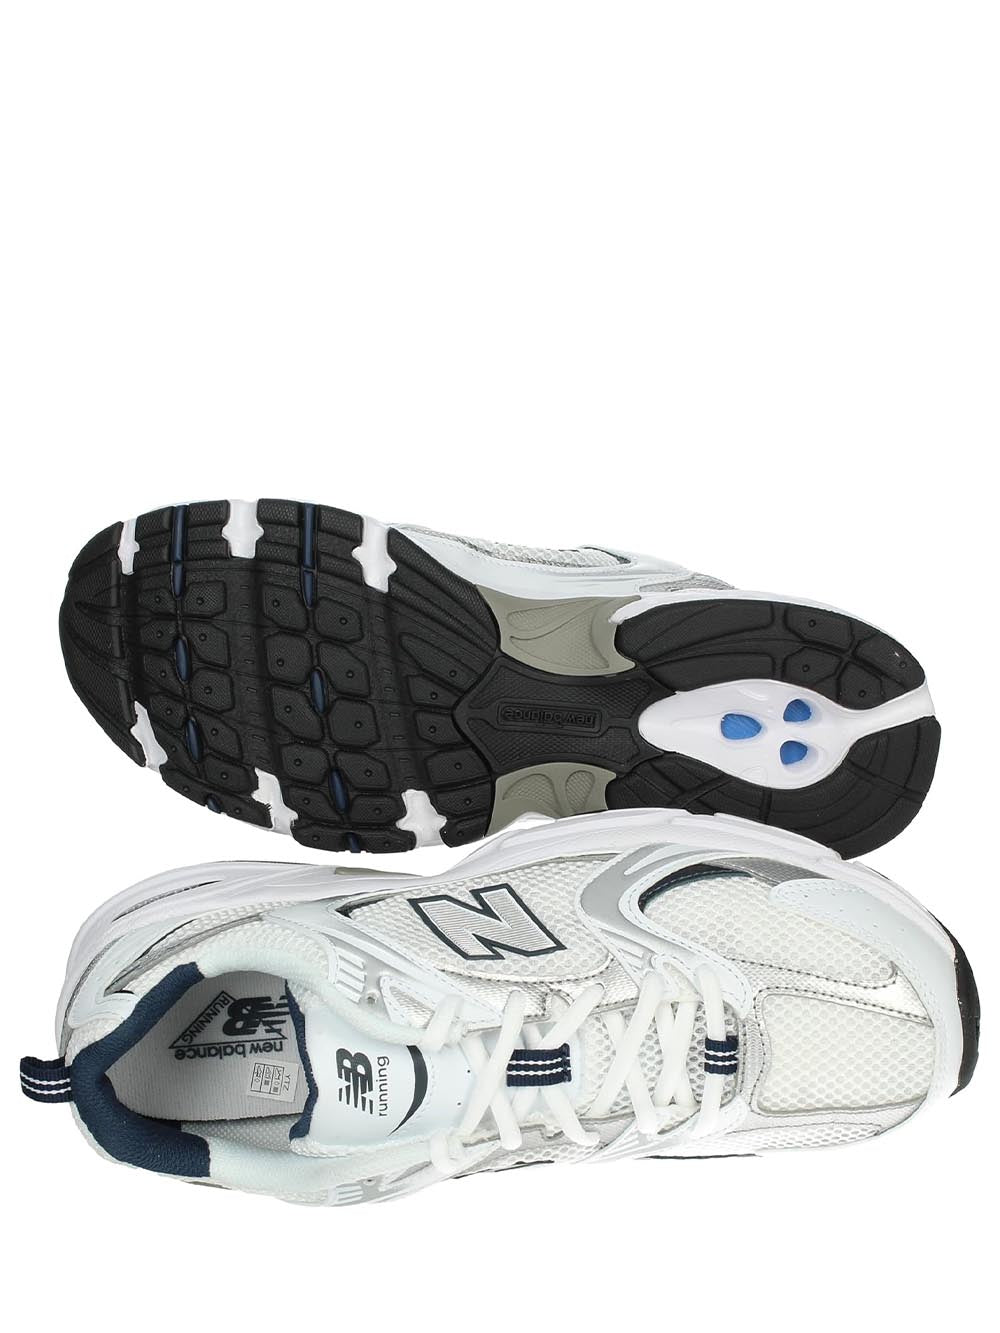 New Balance Sneakers Unisex Mr530 White blue